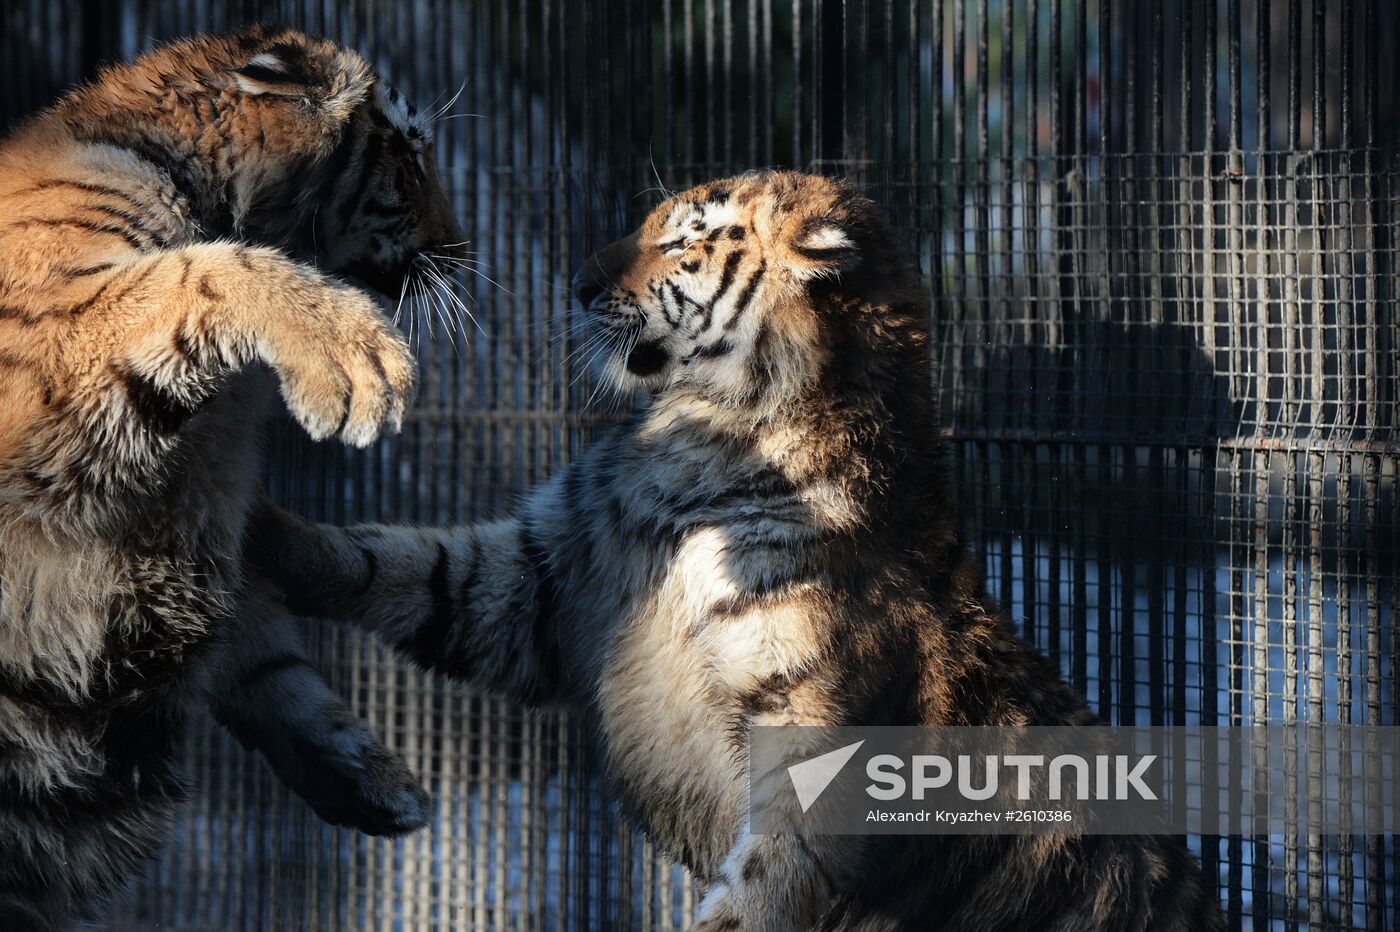 The Novosibirsk Zoo